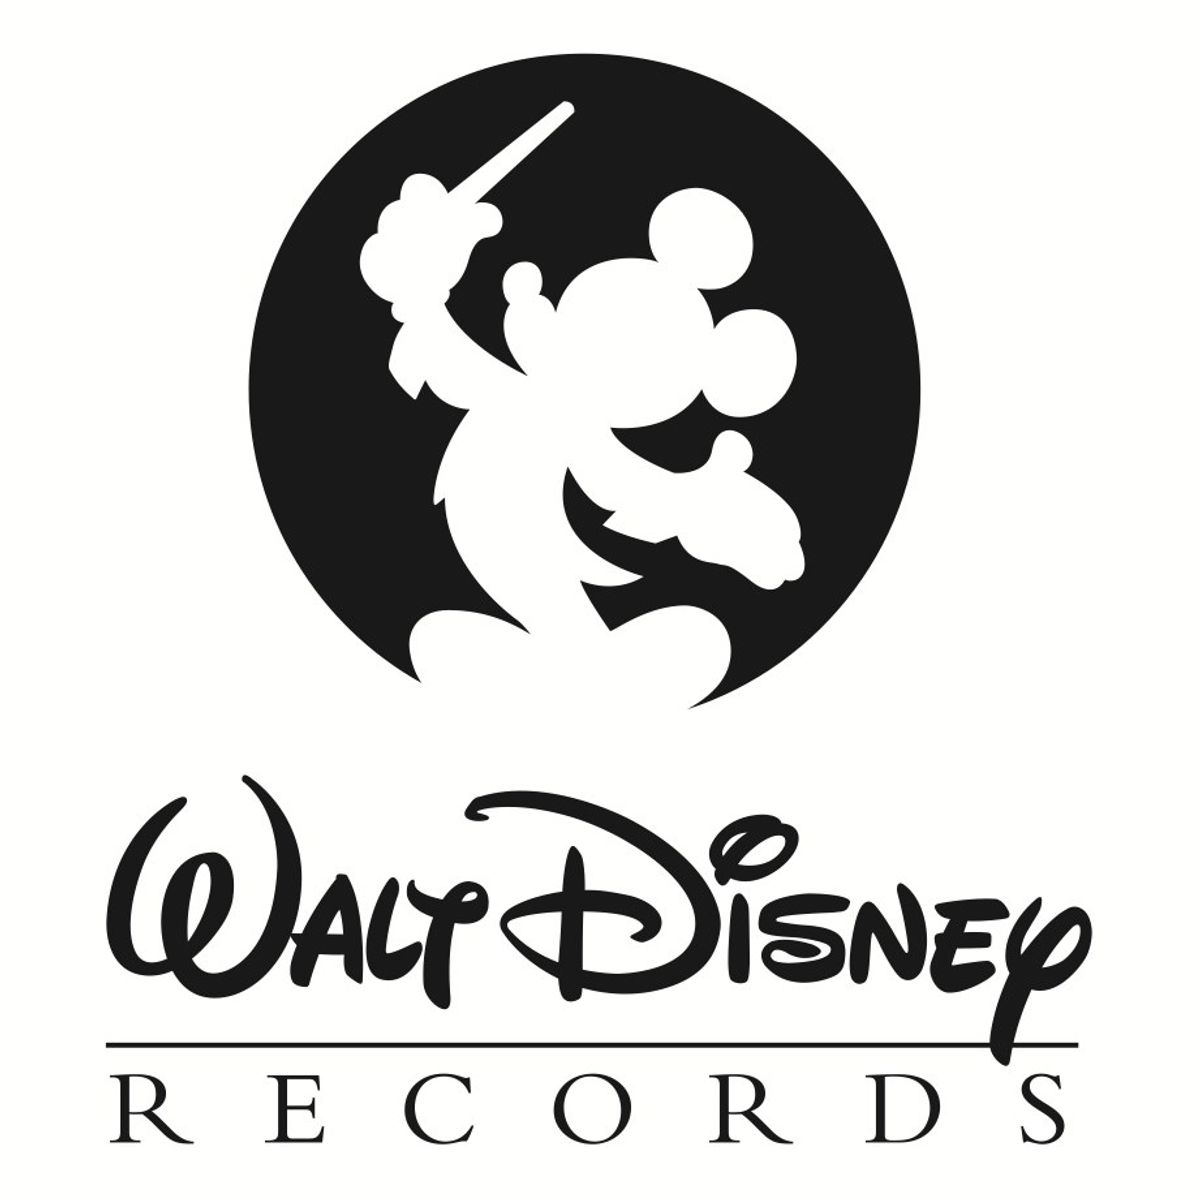 15 Disney Songs To Get You Through Finals Week